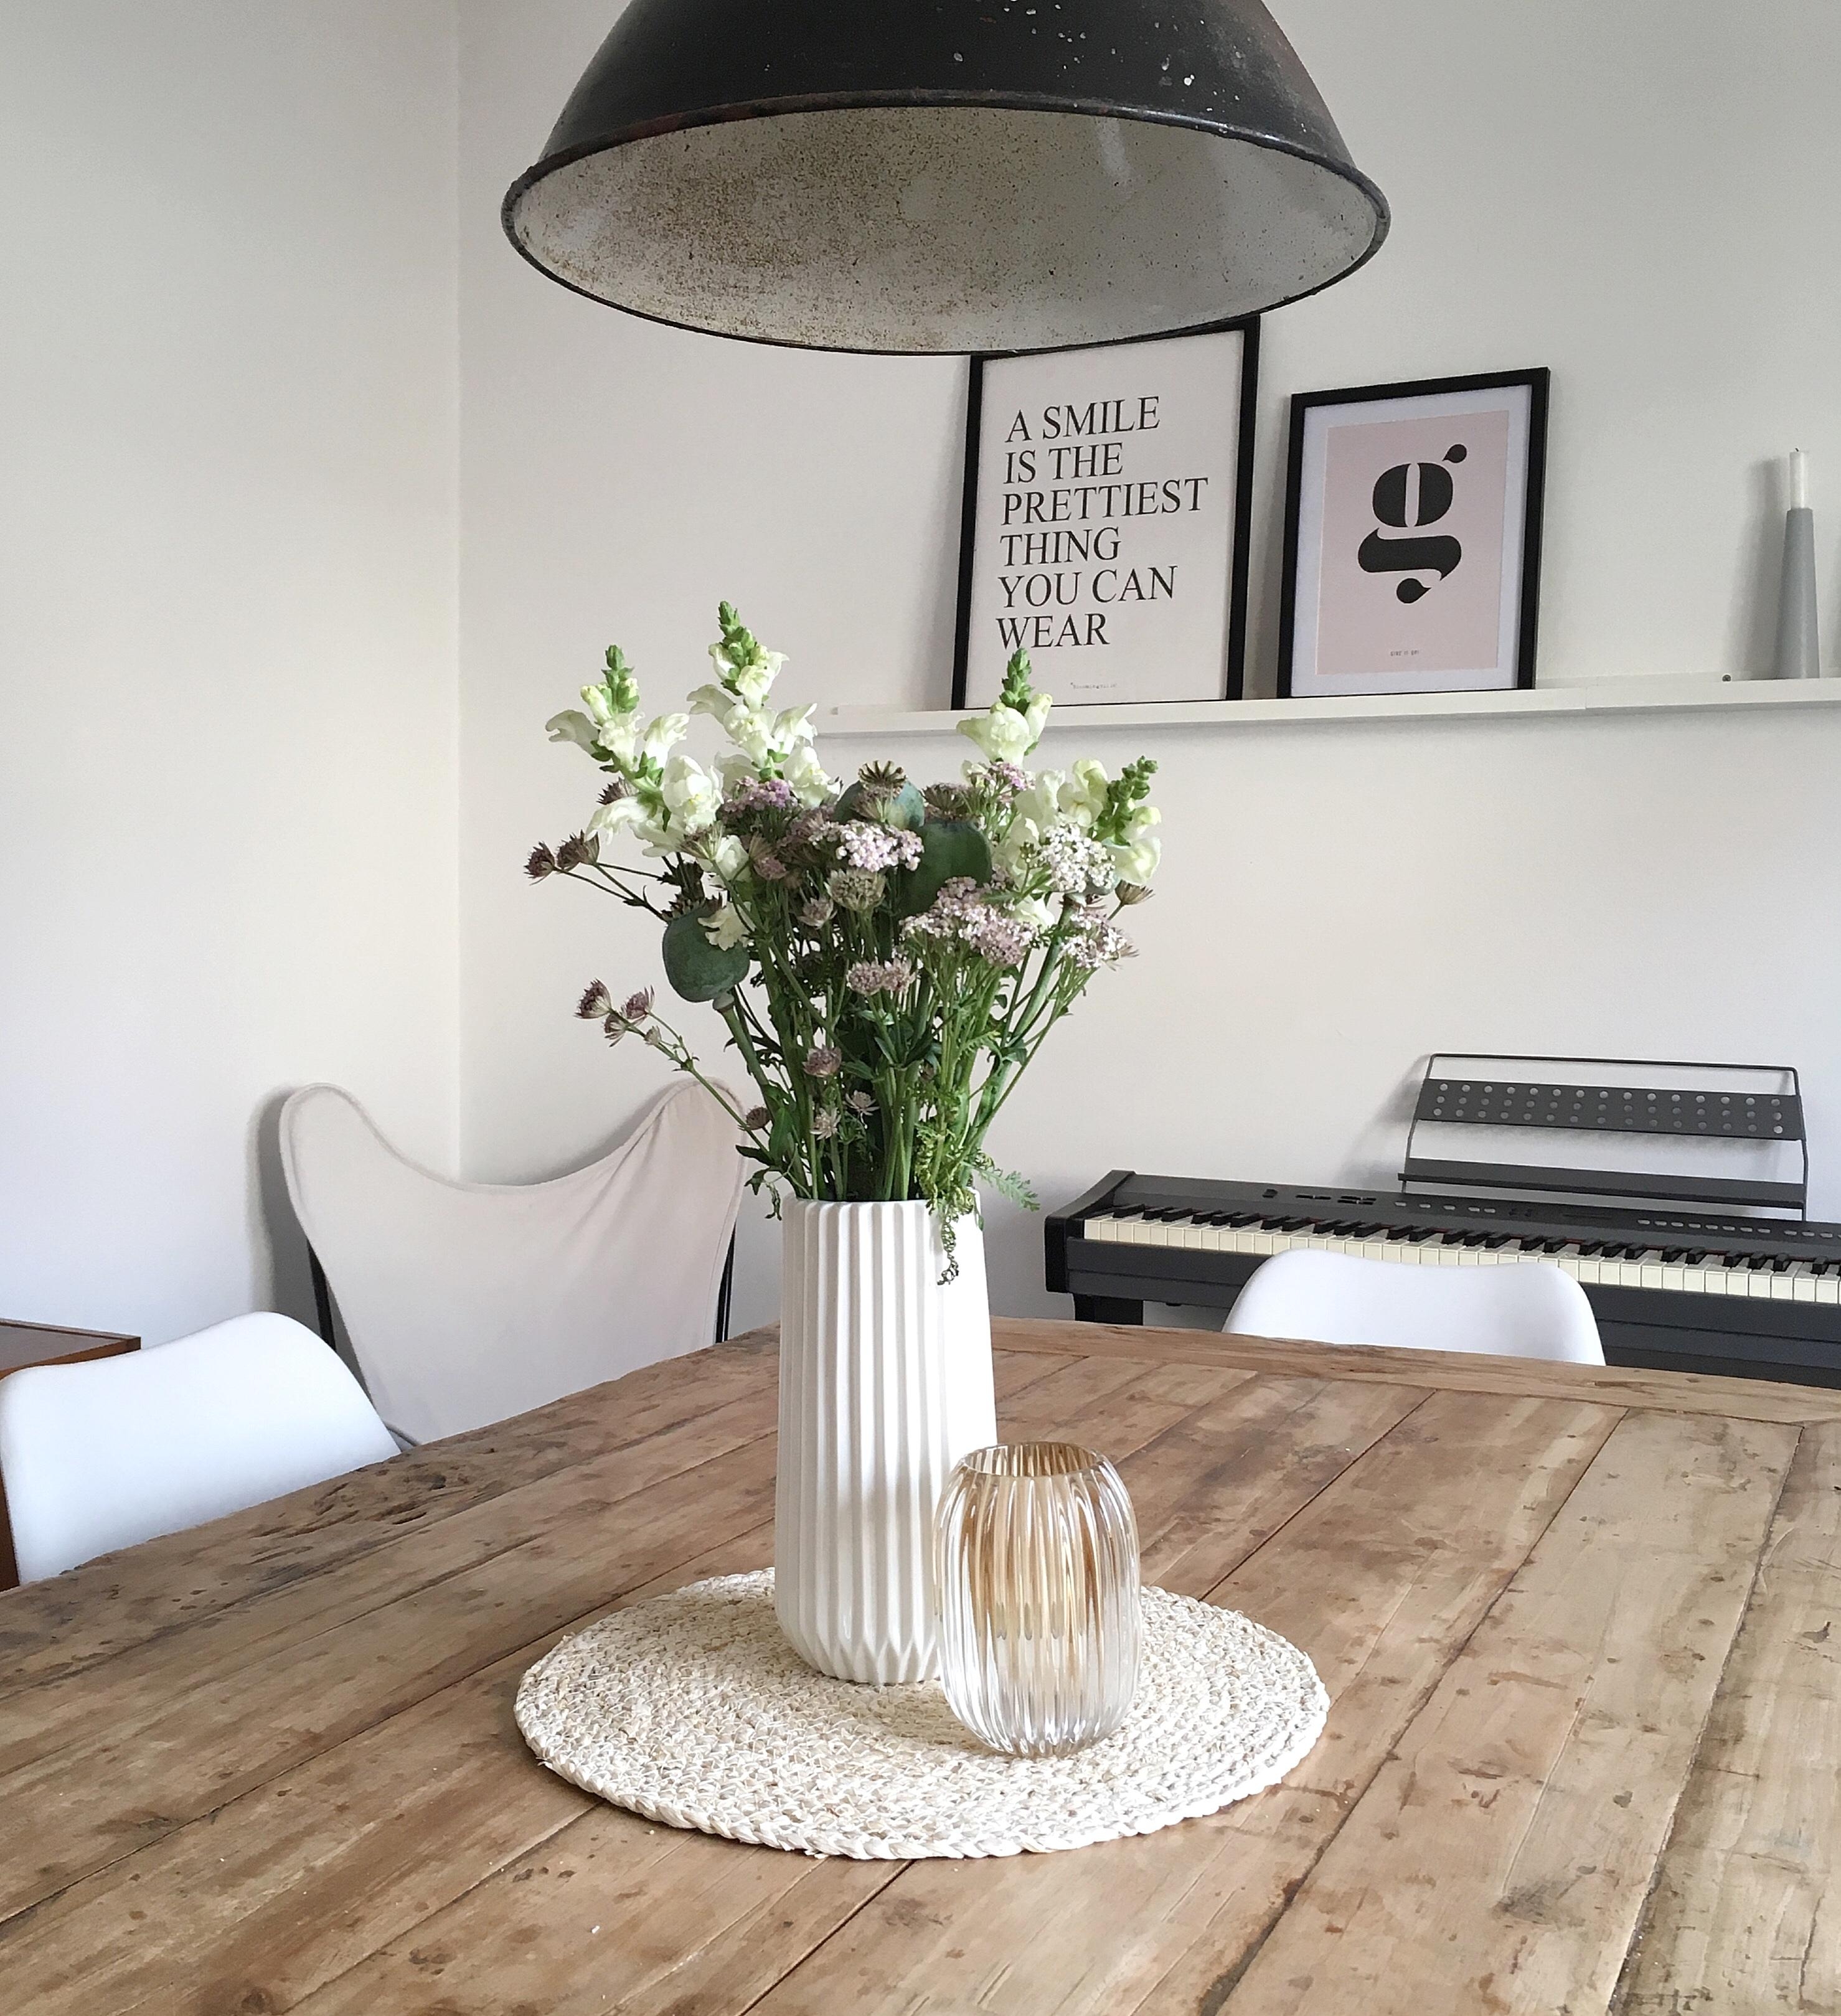 Livingroom in an old house
und immer frische Blumen
#couchstyle #interiorinspo #livingroom #tabletop #details